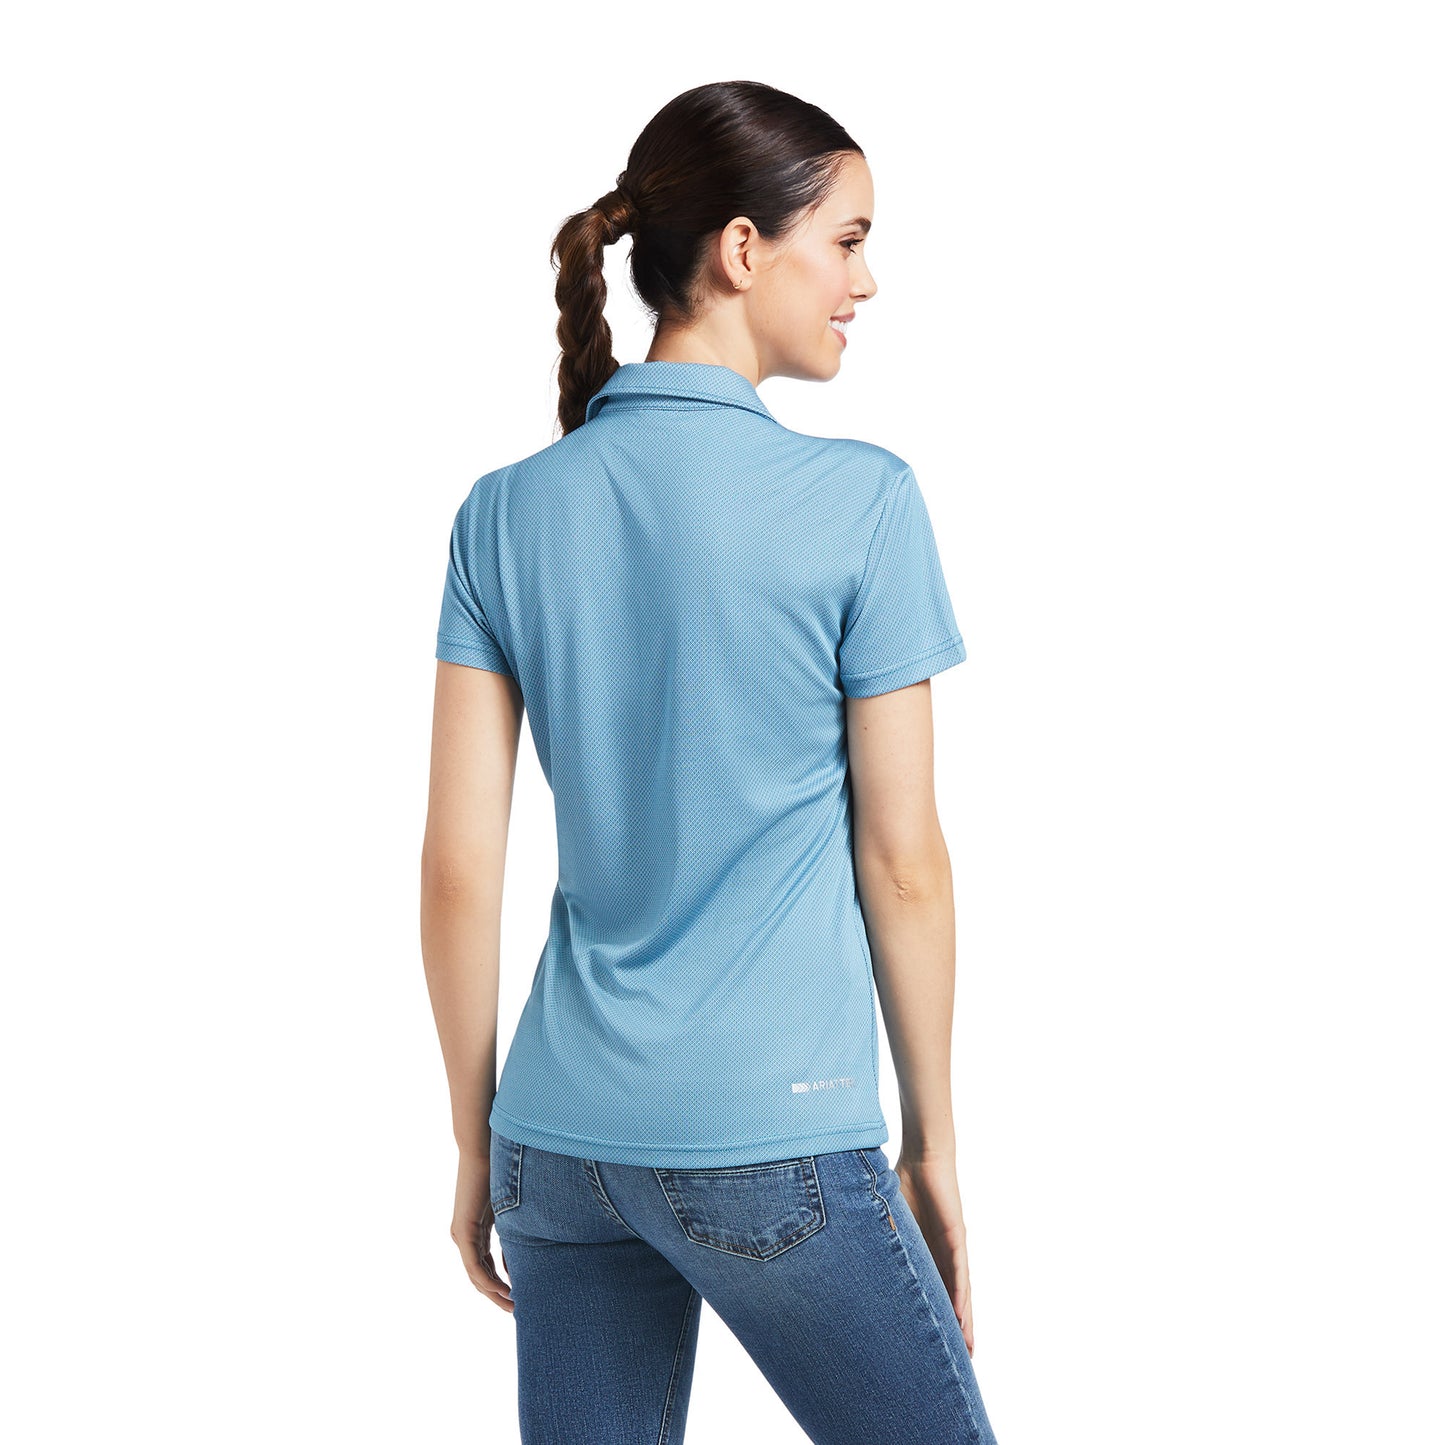 Ariat Ladies Talent Short Sleeve Saxony Blue Polo Shirt 10039323